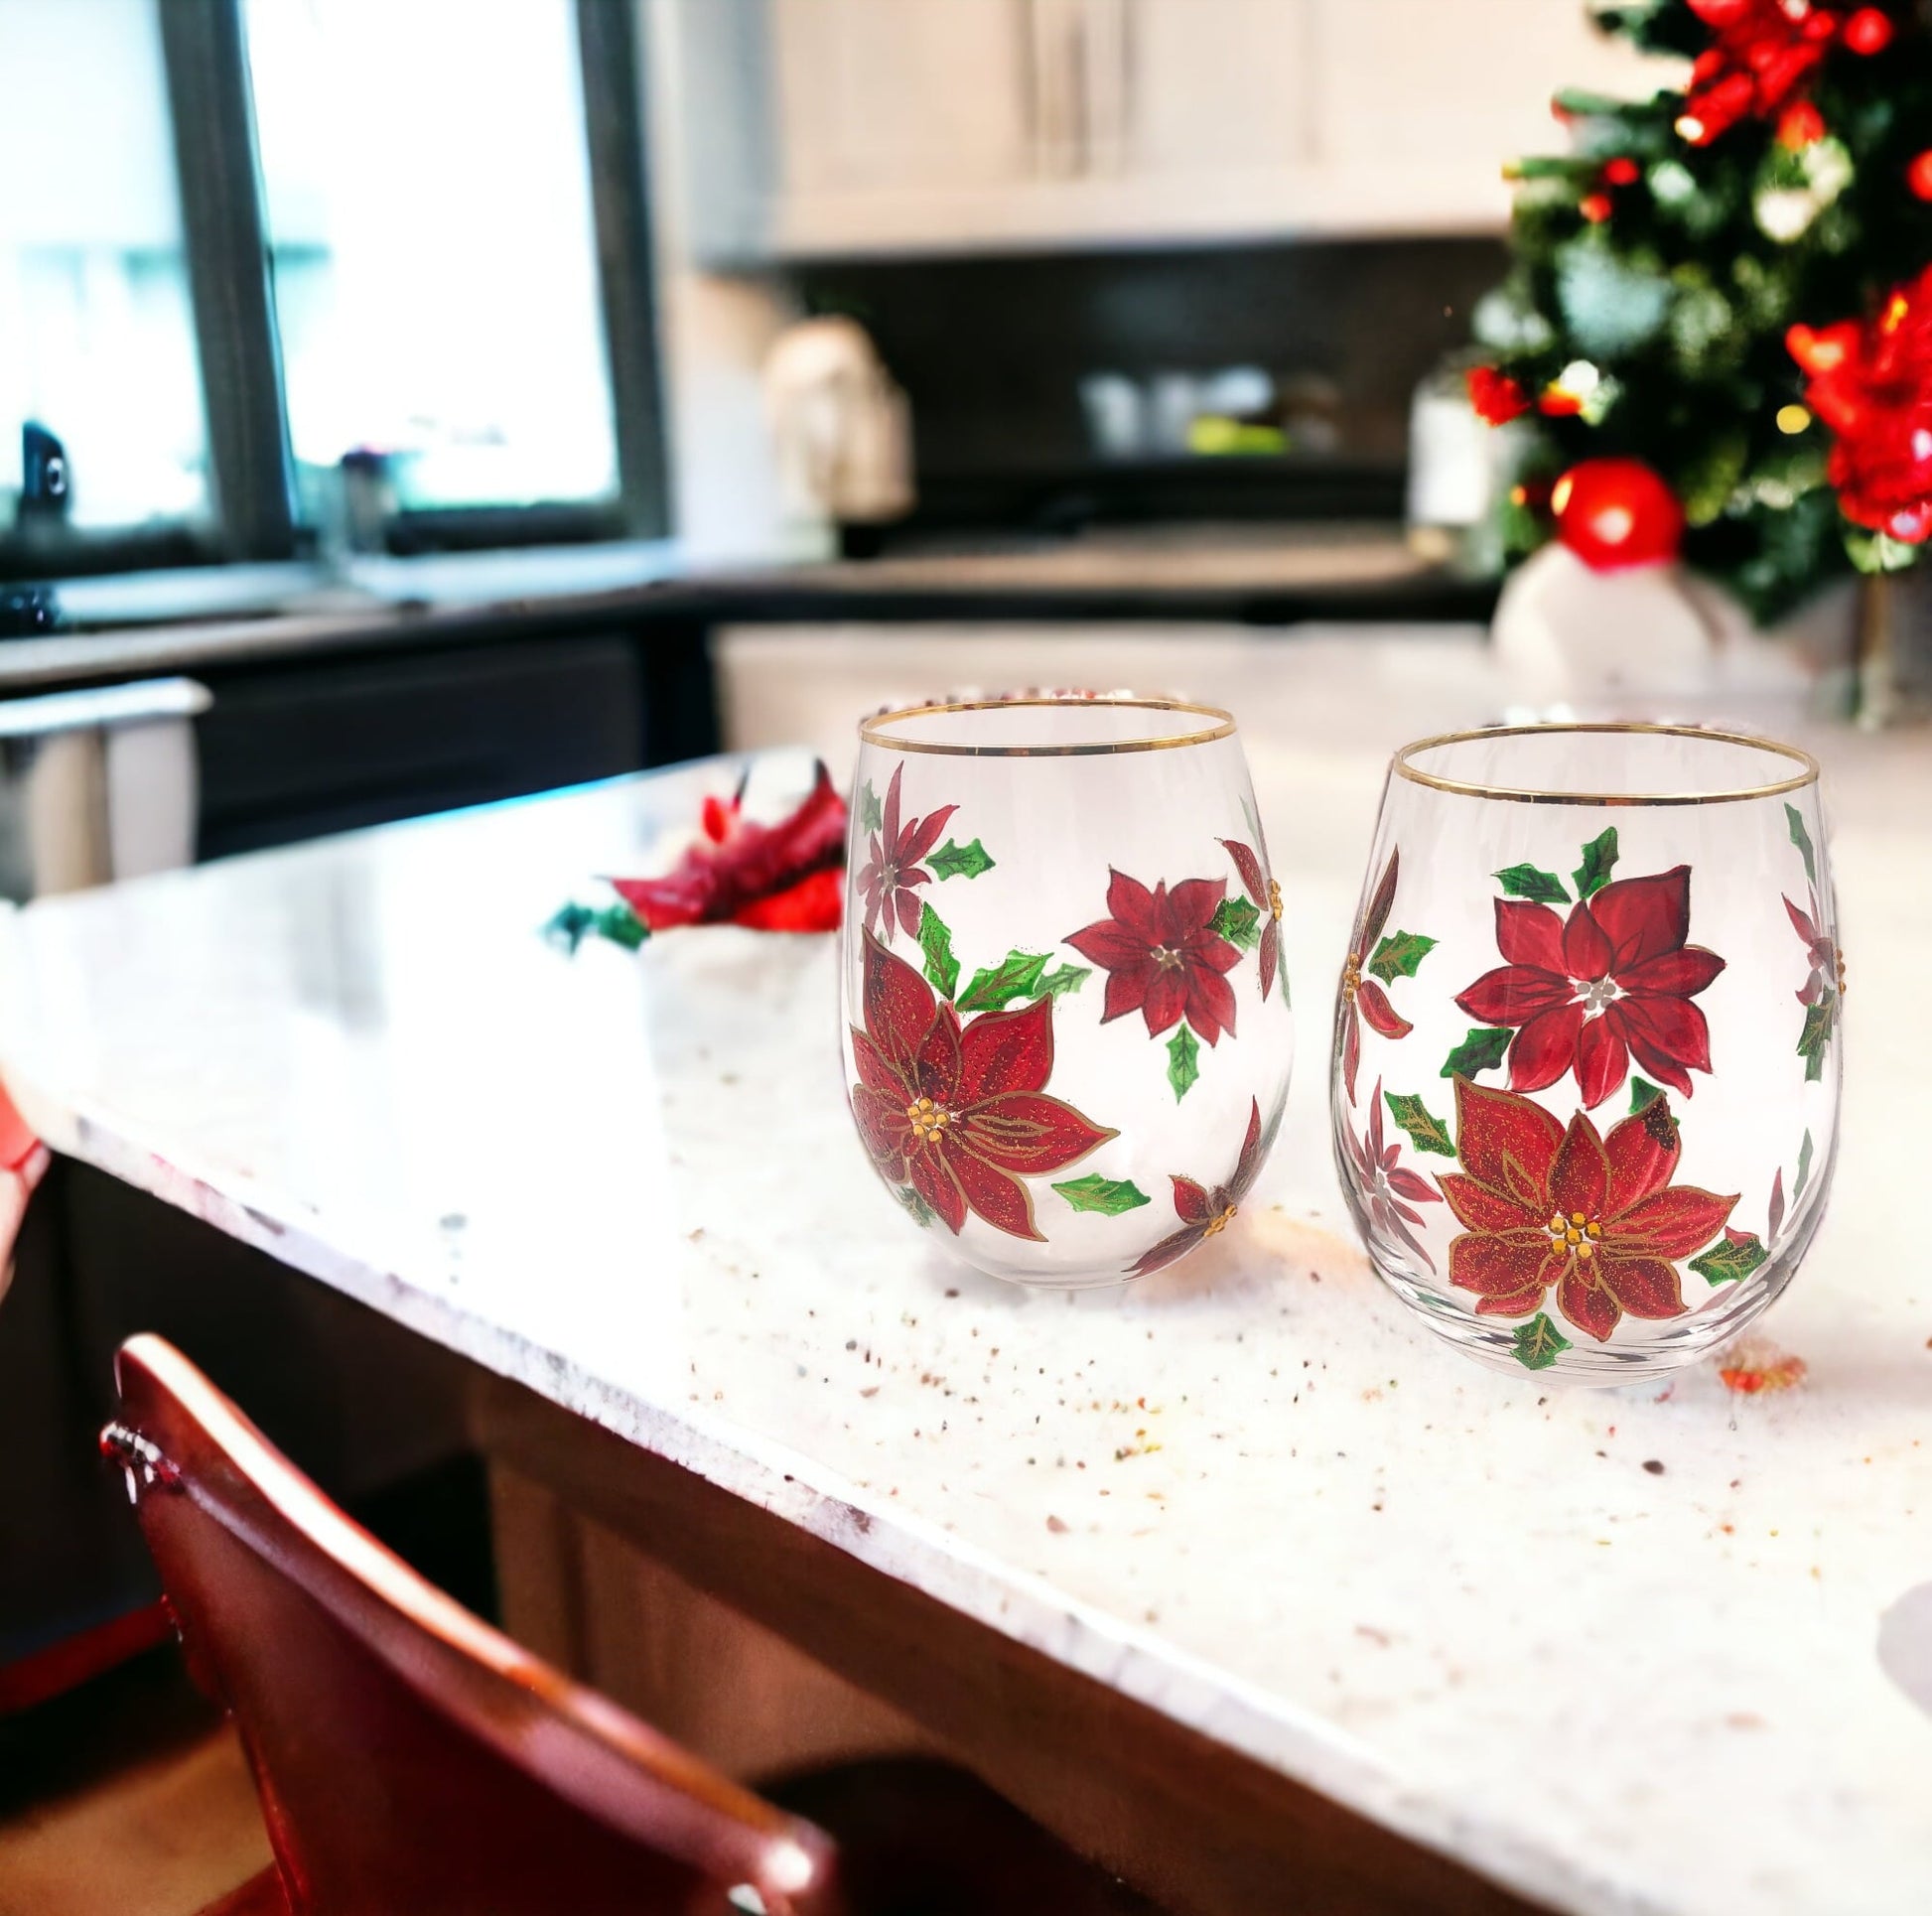 Holiday Stemless Wine Glass Set